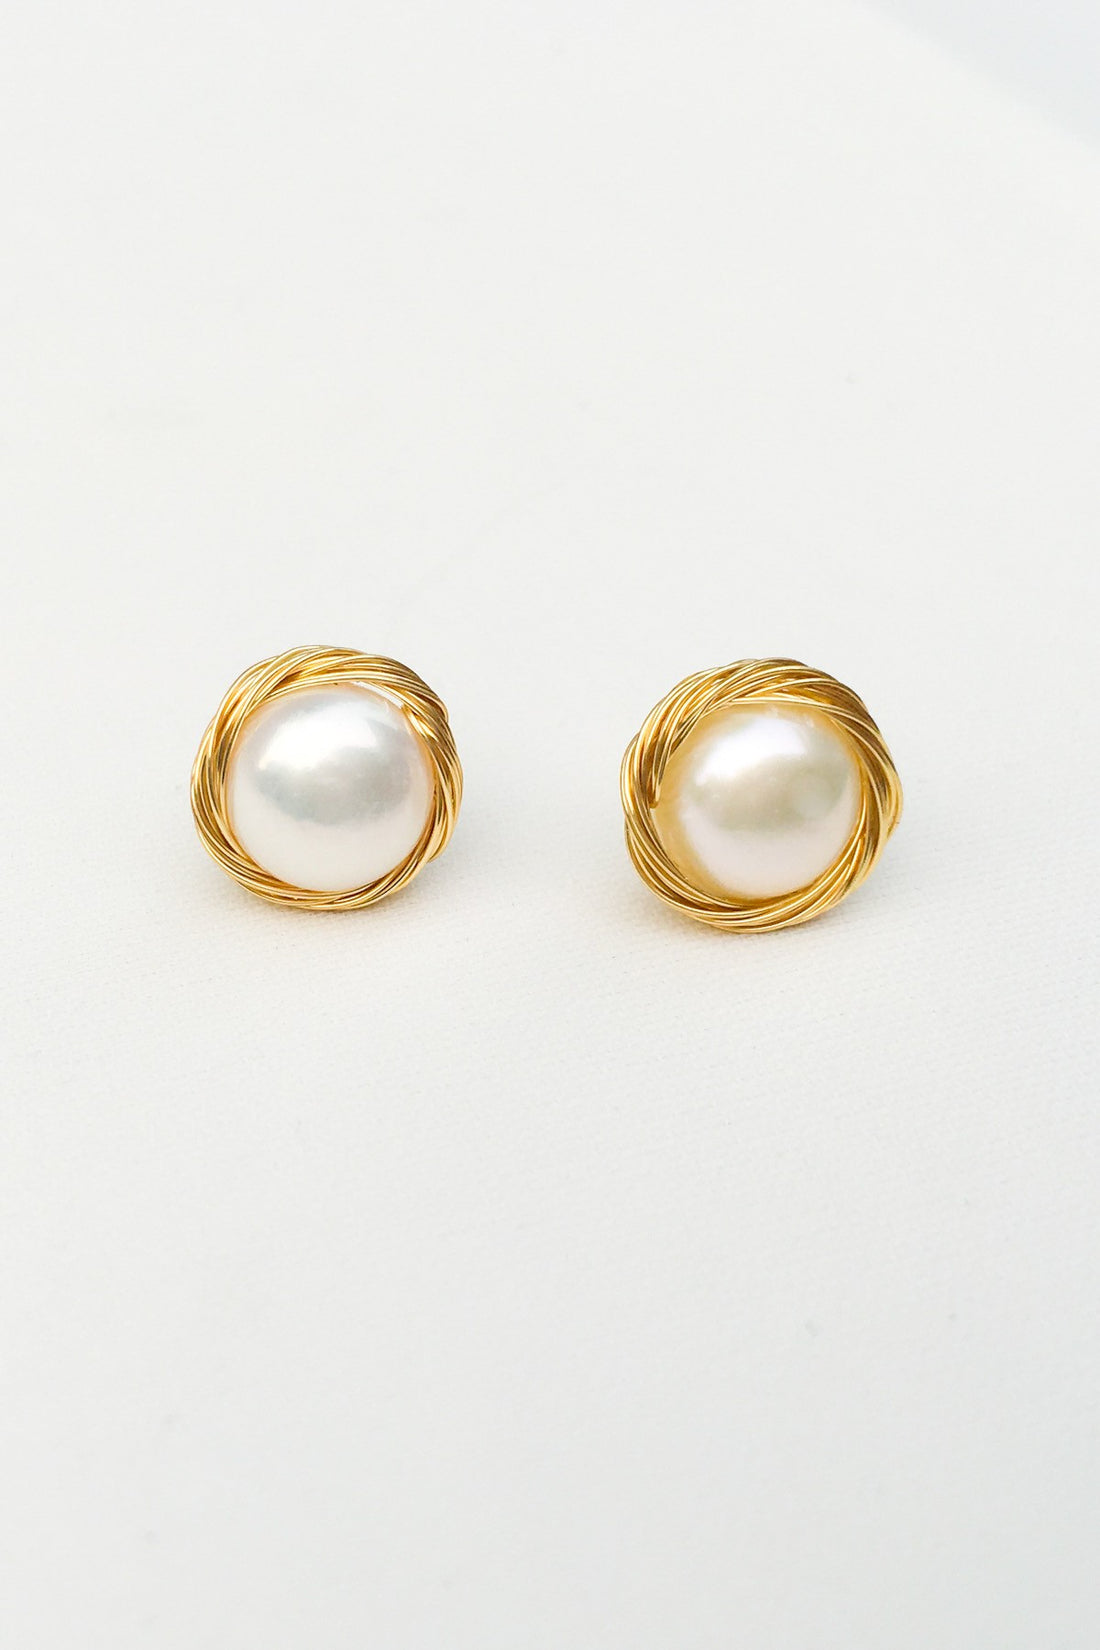 SKYE San Francisco SF shop ethical sustainable modern minimalist luxury women jewelry 2020 Aadi 18K Gold Freshwater Pearl Earrings